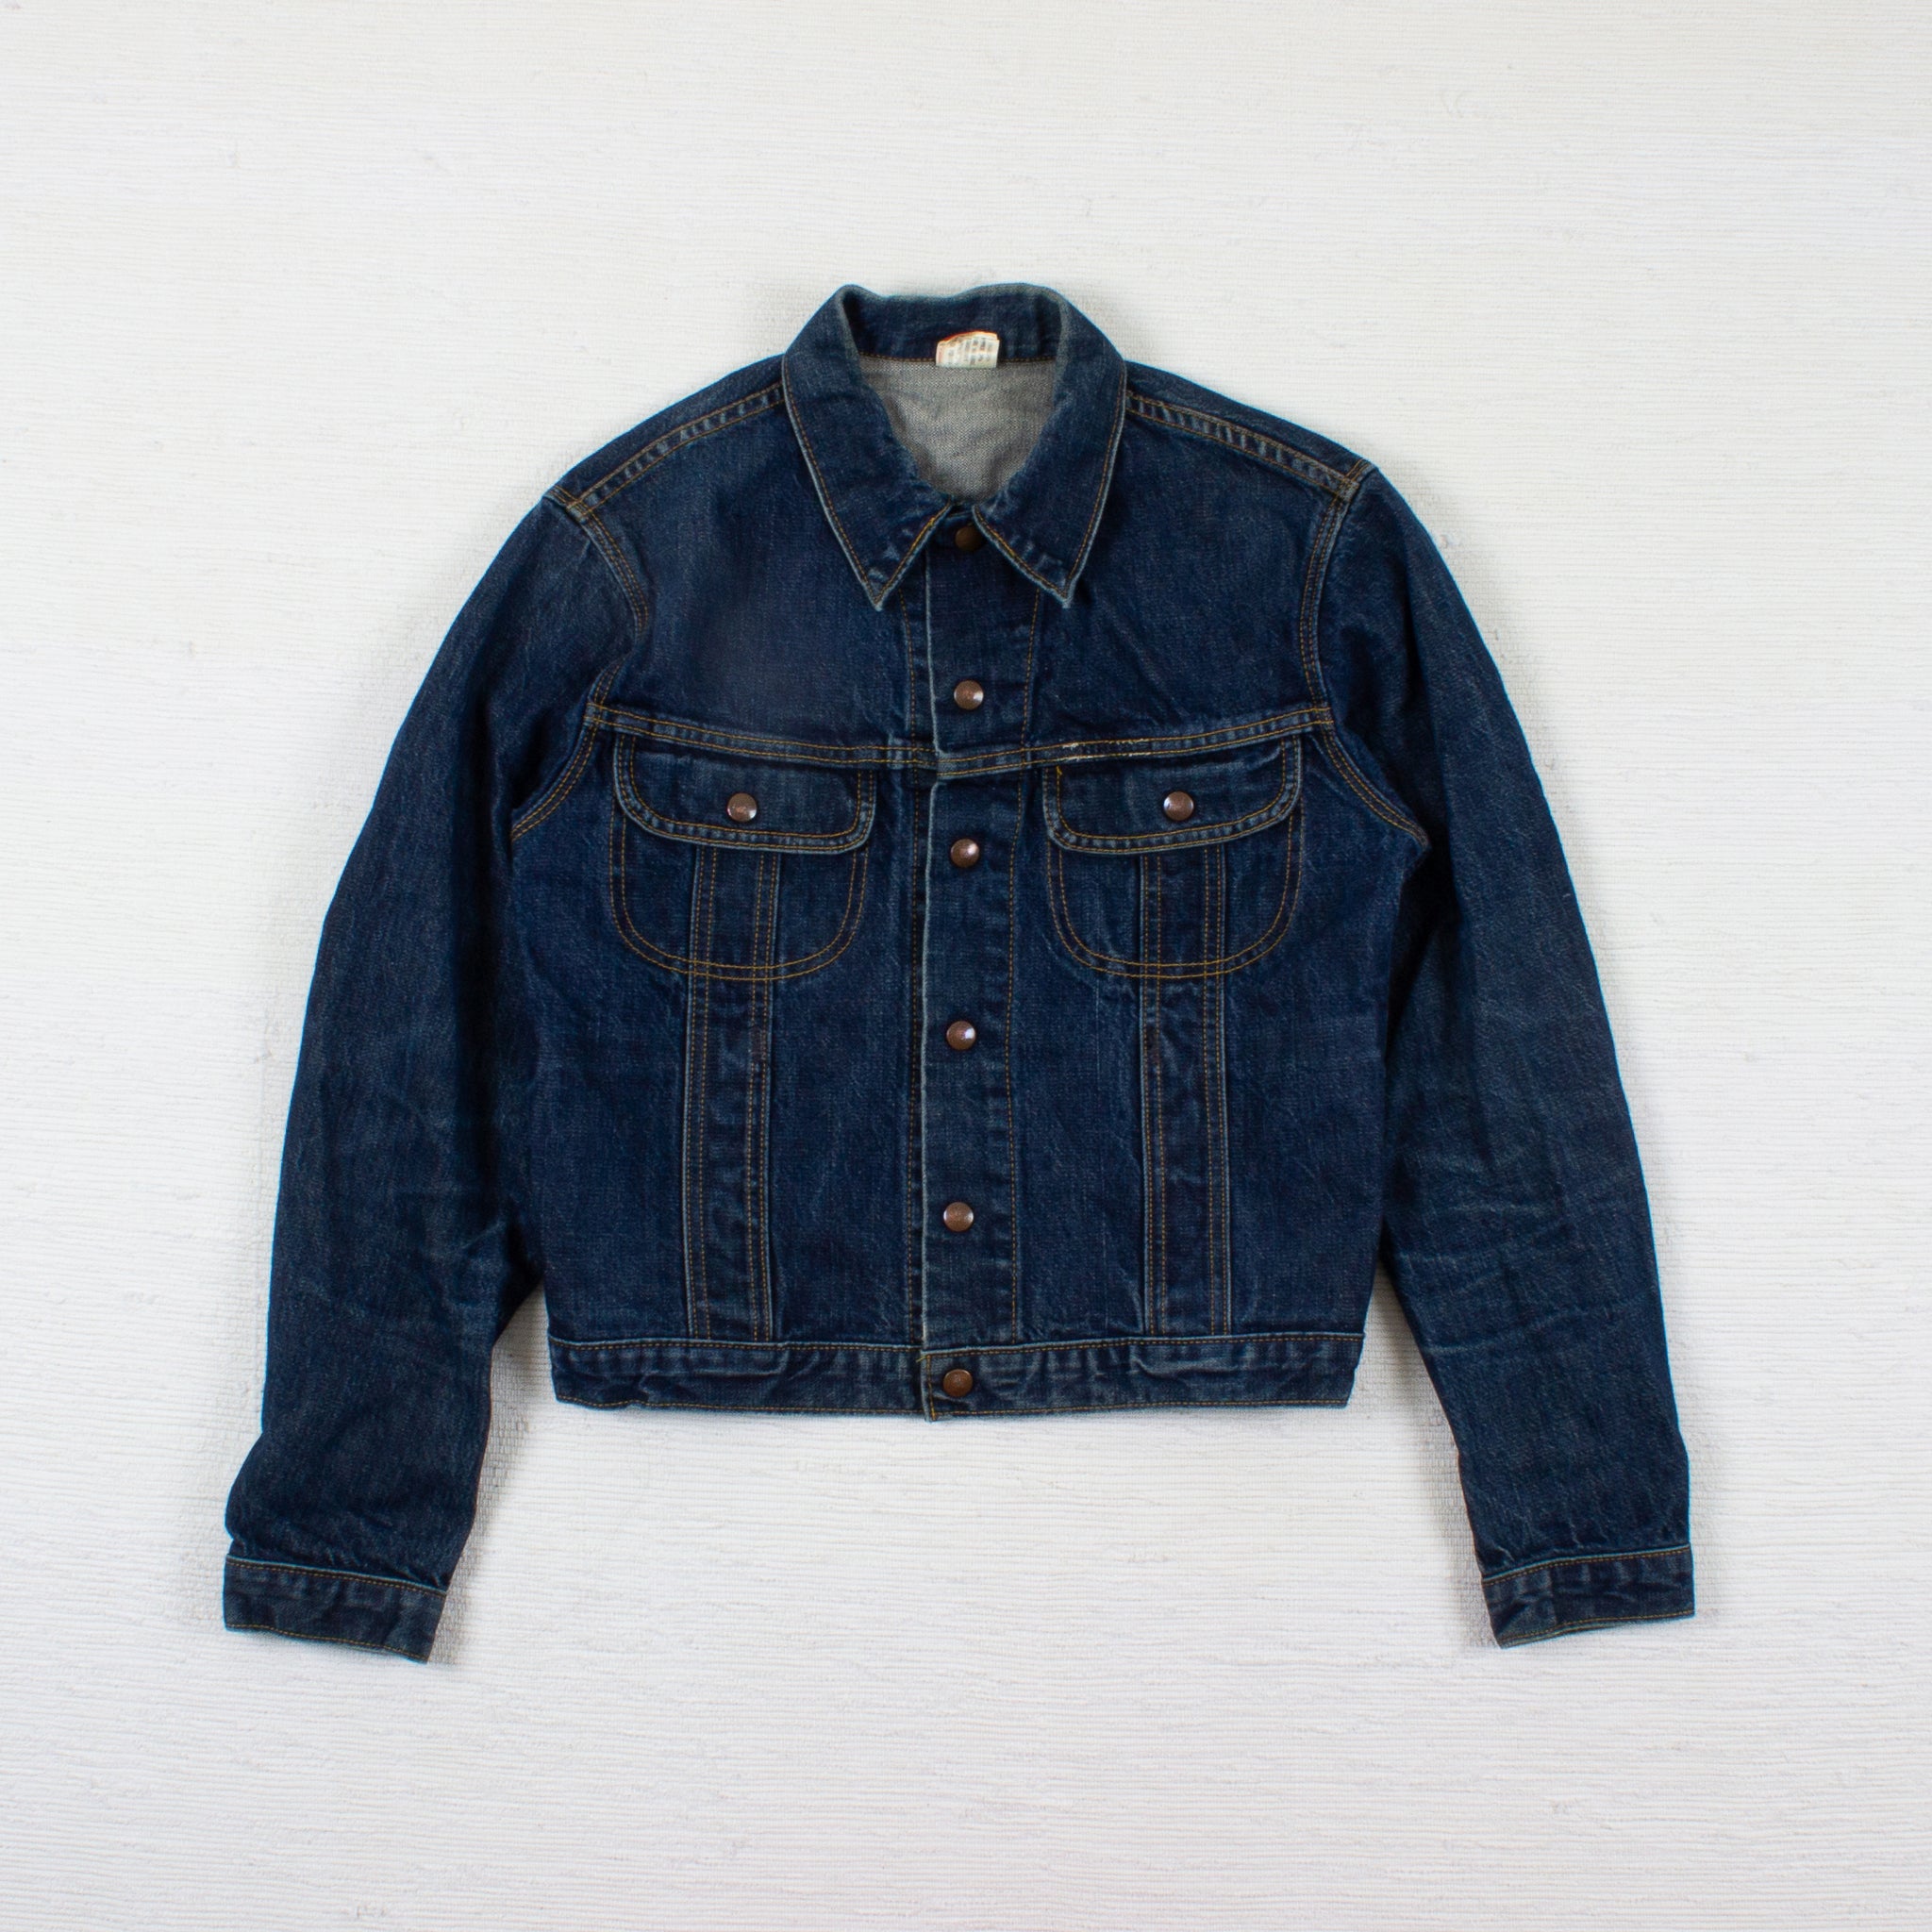 GwG Medium Vintage Jeans Jacket